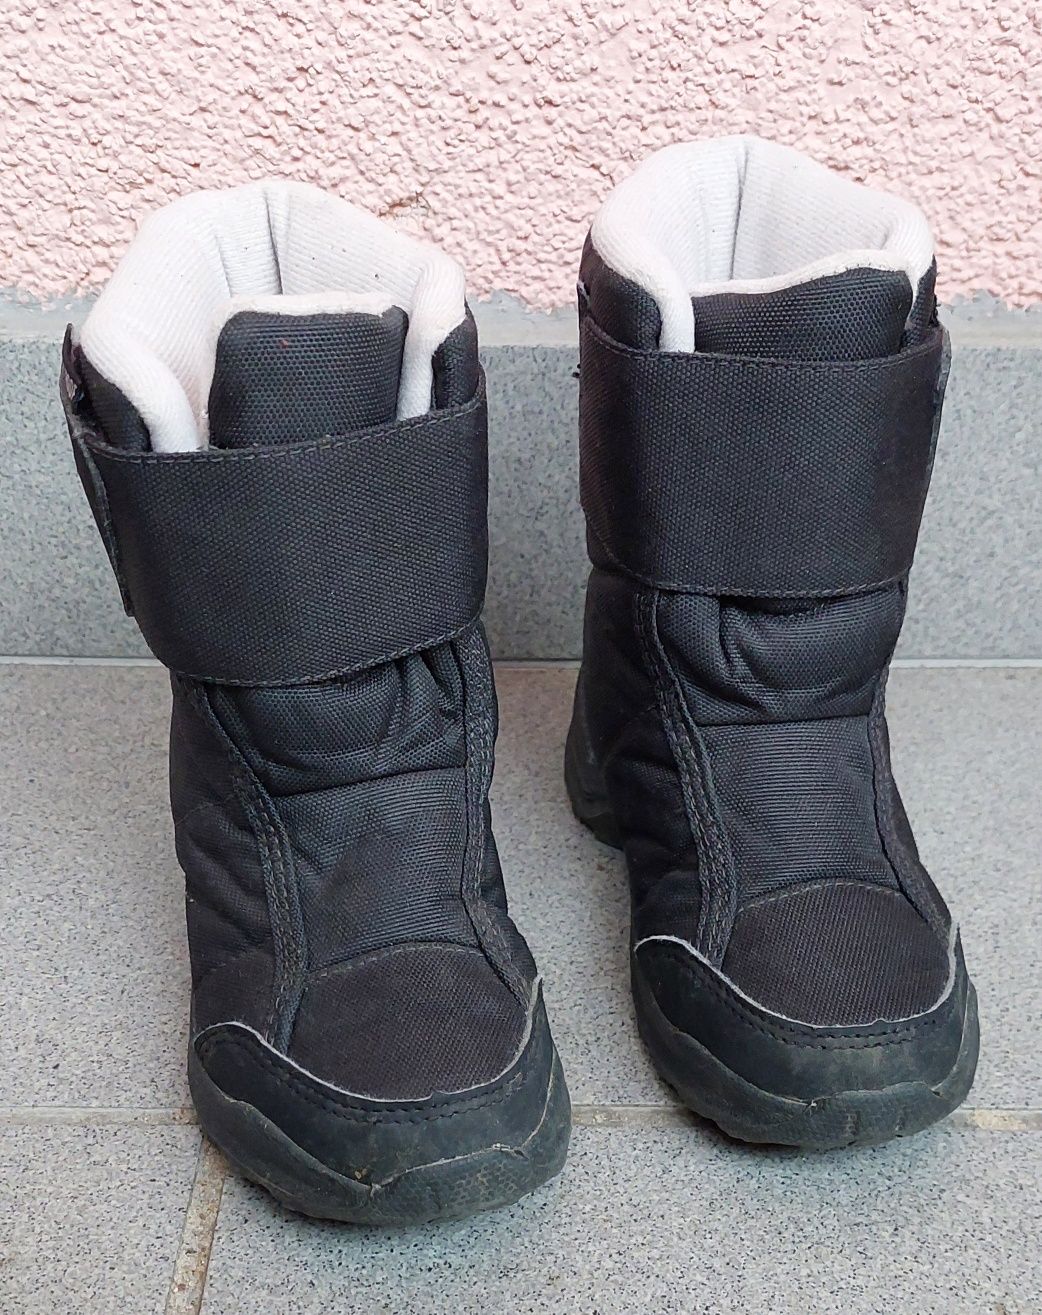 Quechua śniegowce 27 buty zimowe